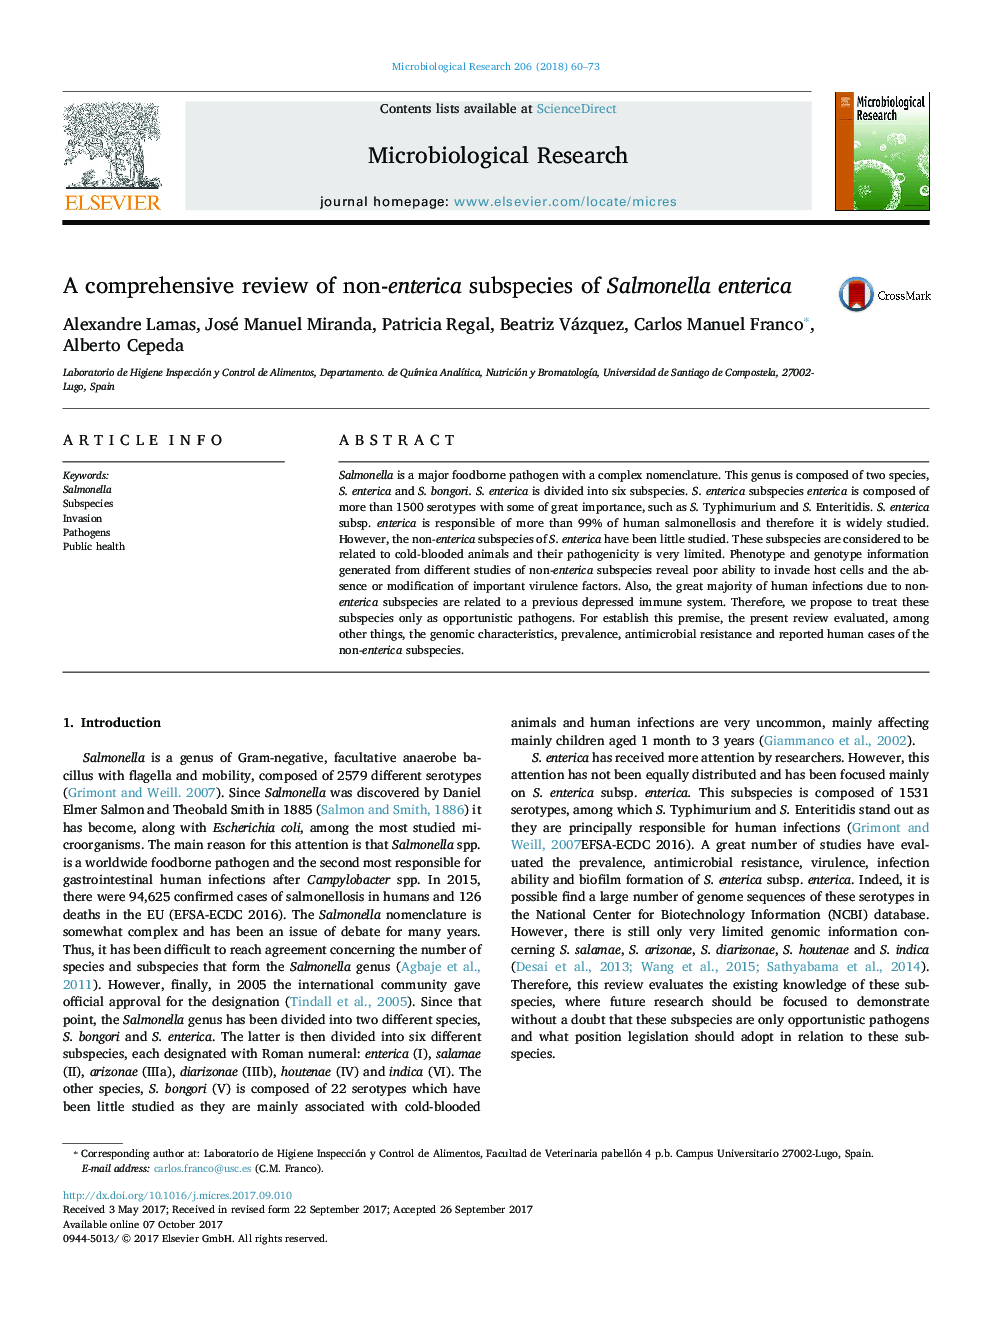 A comprehensive review of non-enterica subspecies of Salmonella enterica